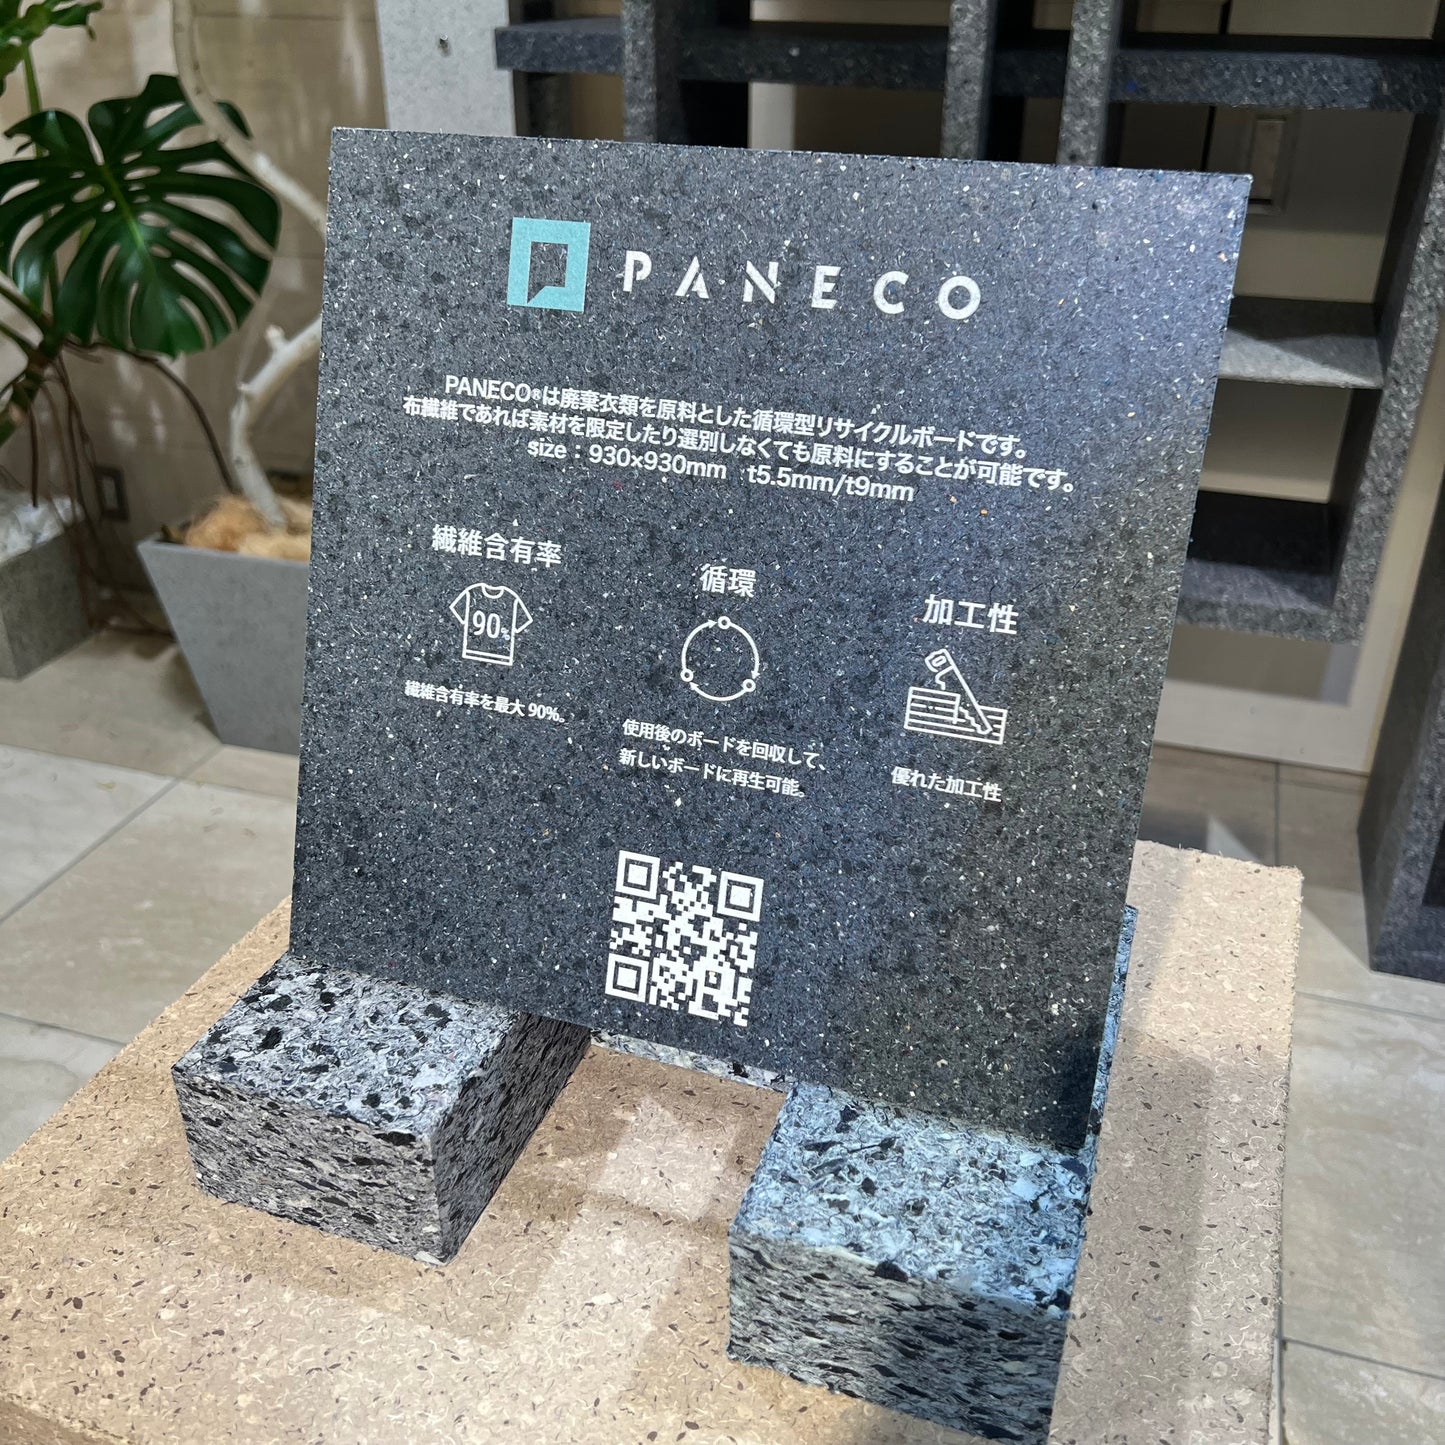 nunock by PANECO サステナブルな繊維リサイクル素材 全色 12個SET ブロック型マテリアル